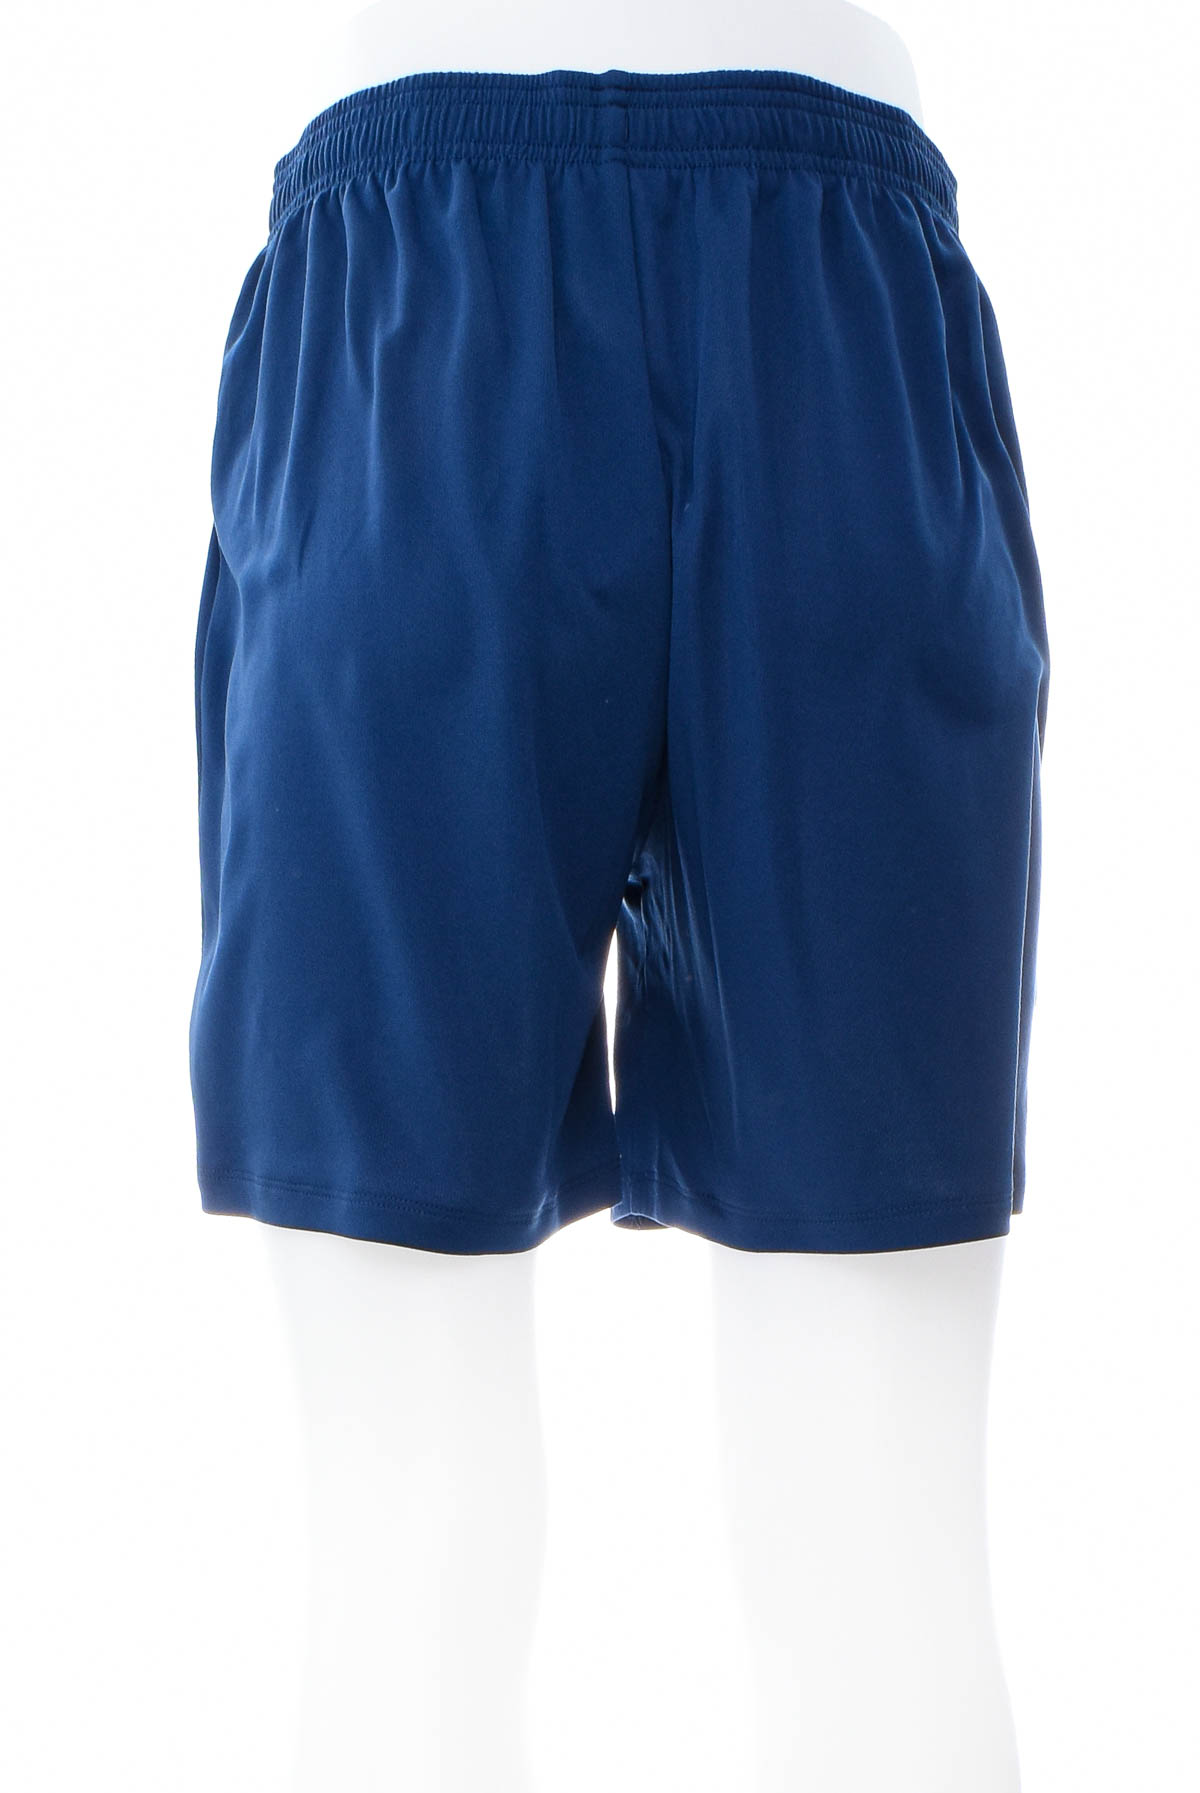 Men's shorts - Umbro - 1